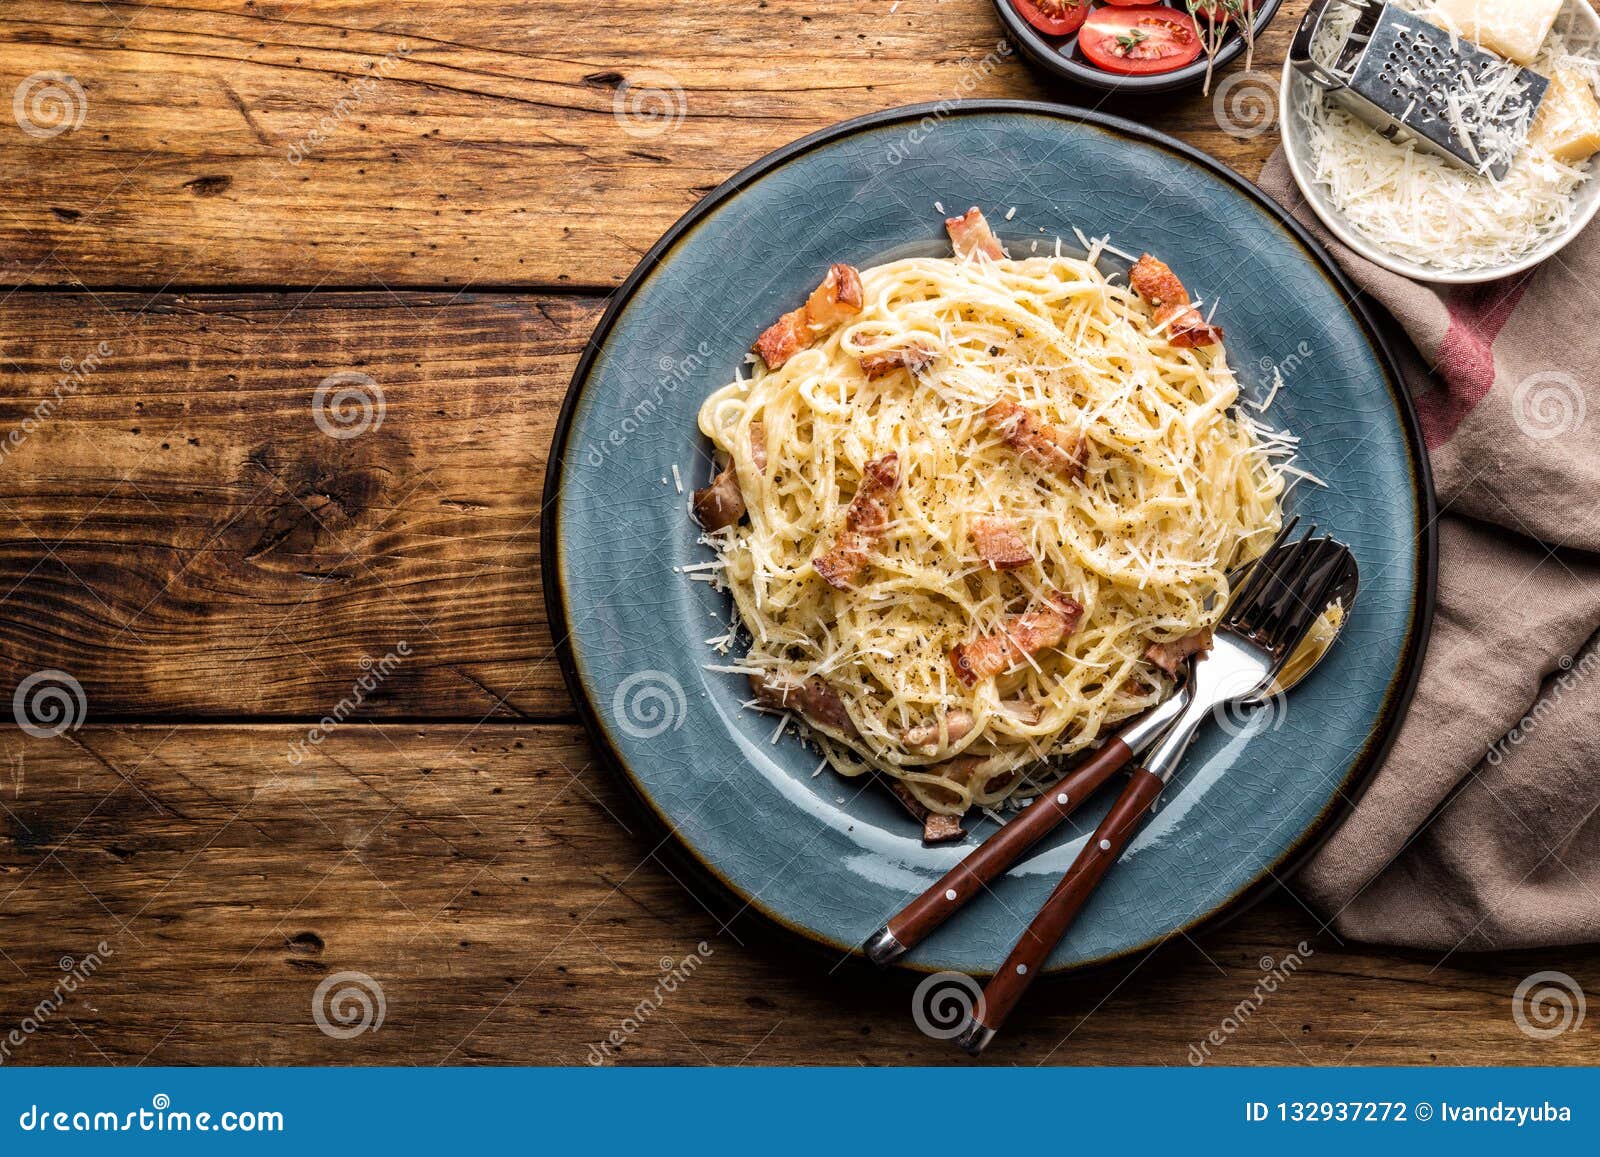 pasta carbonara, spaghetti, cooked according to the traditional italian recipe